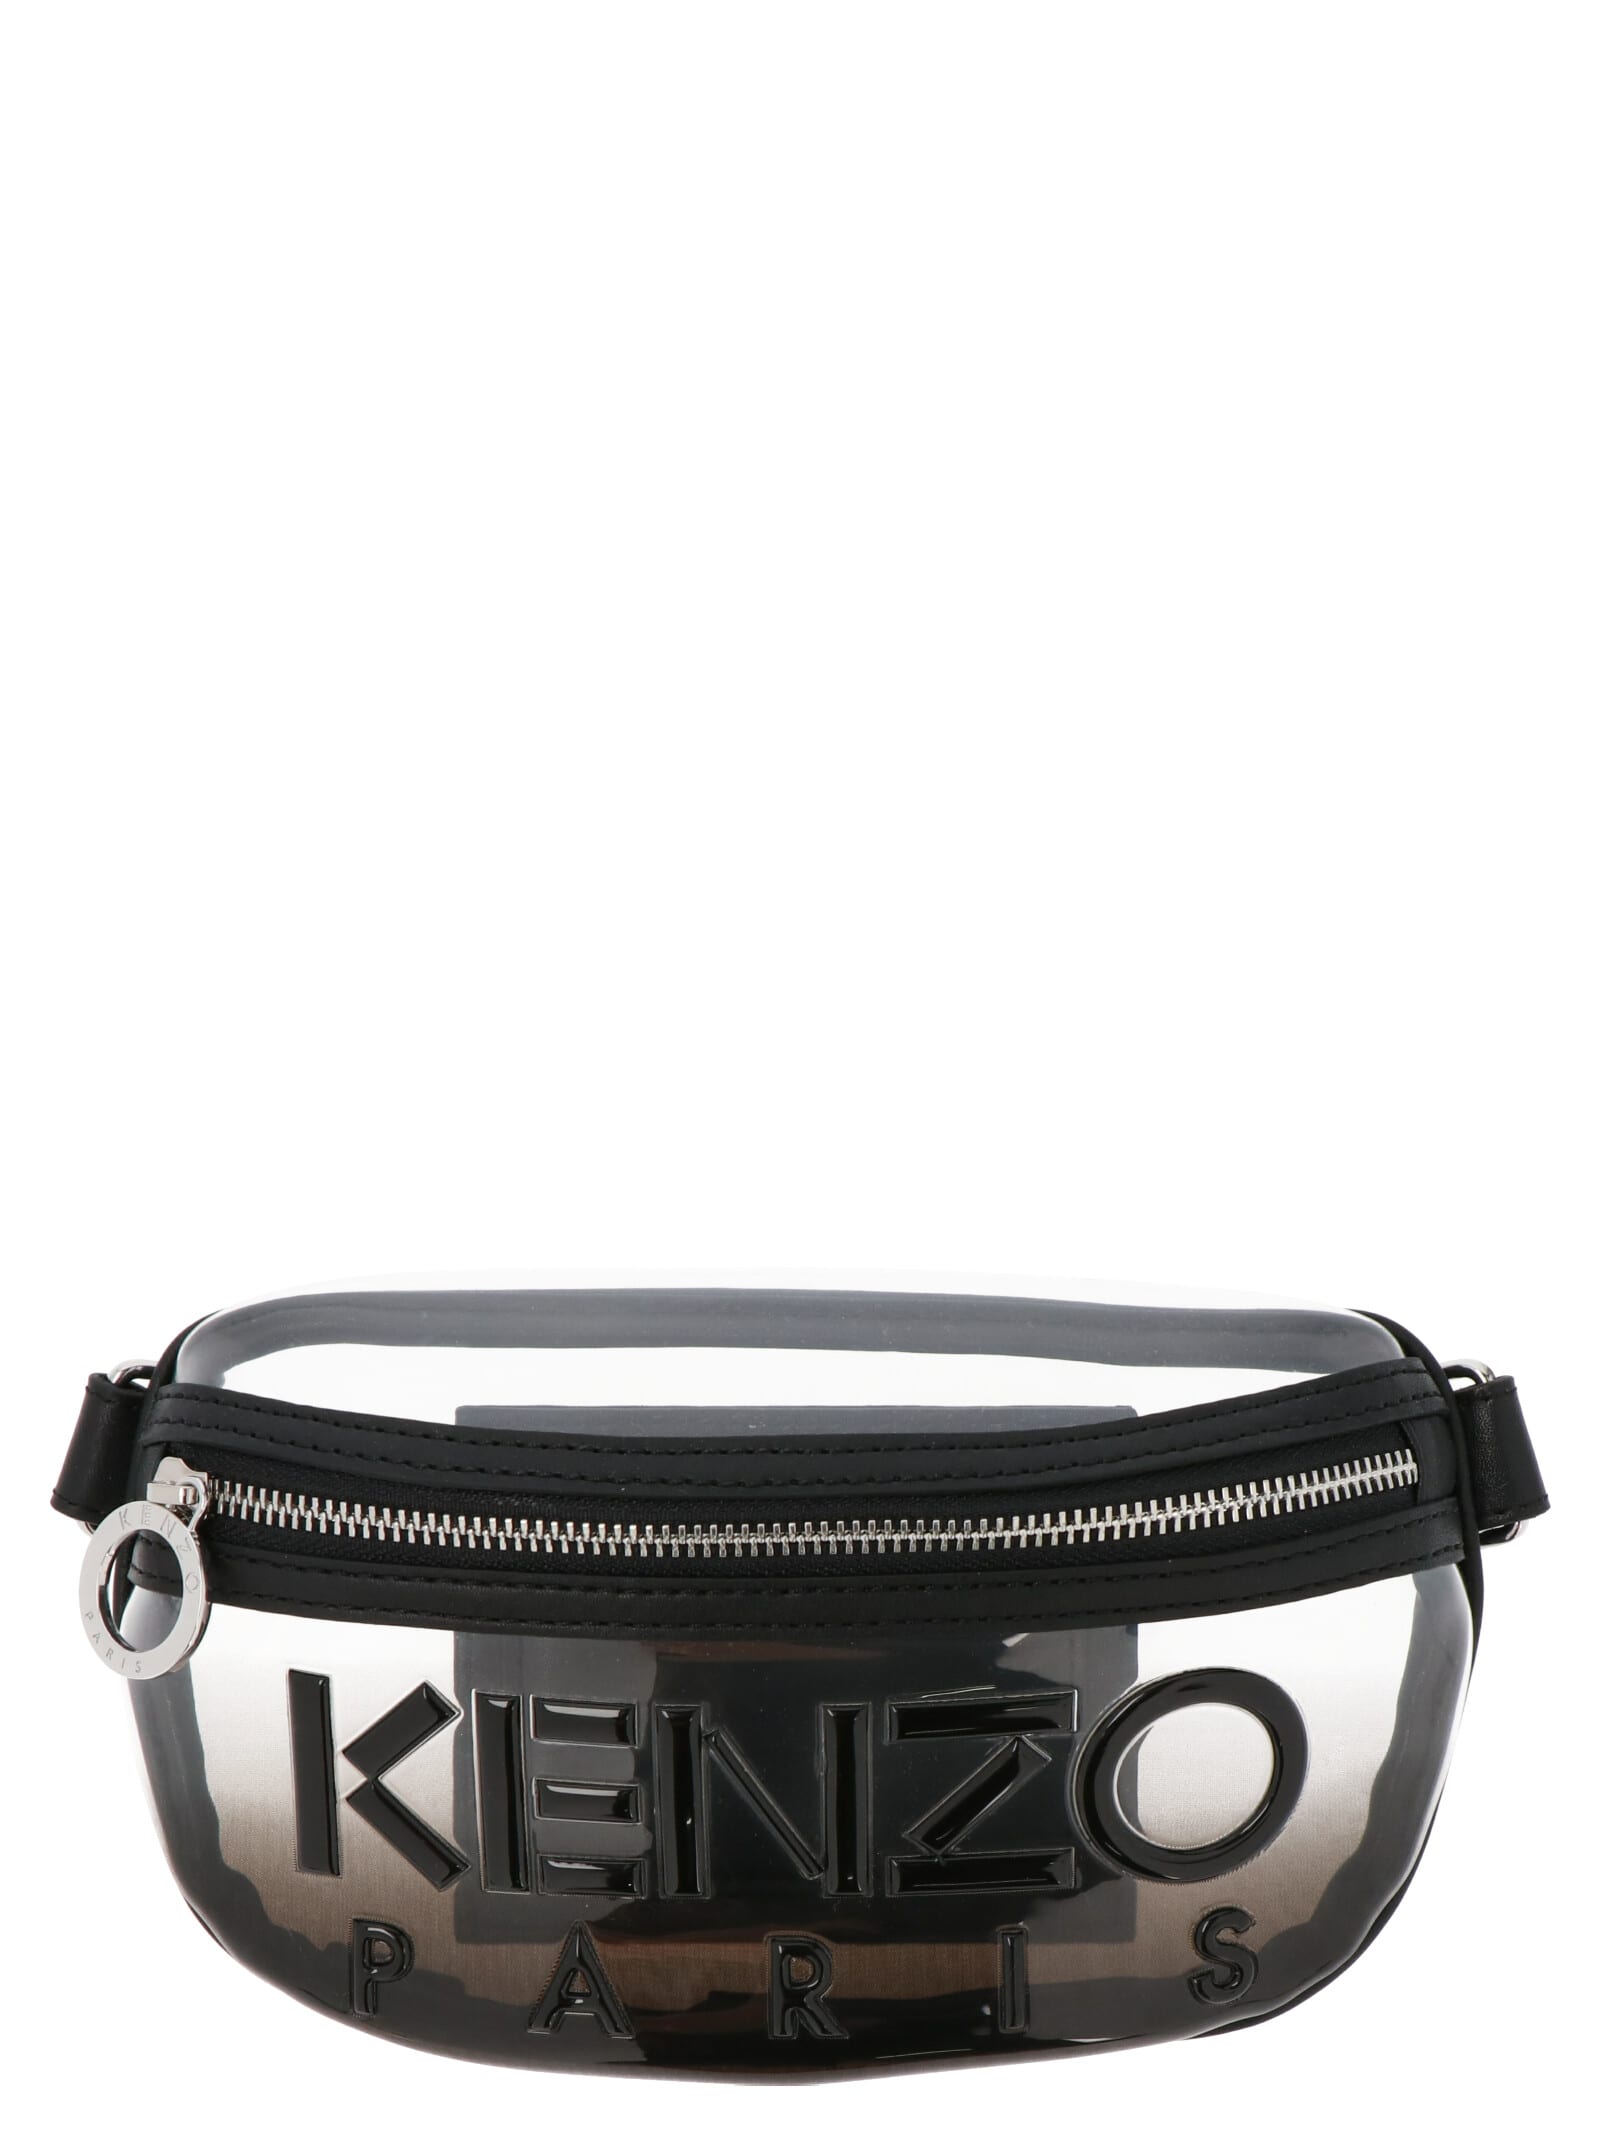 kenzo fanny pack